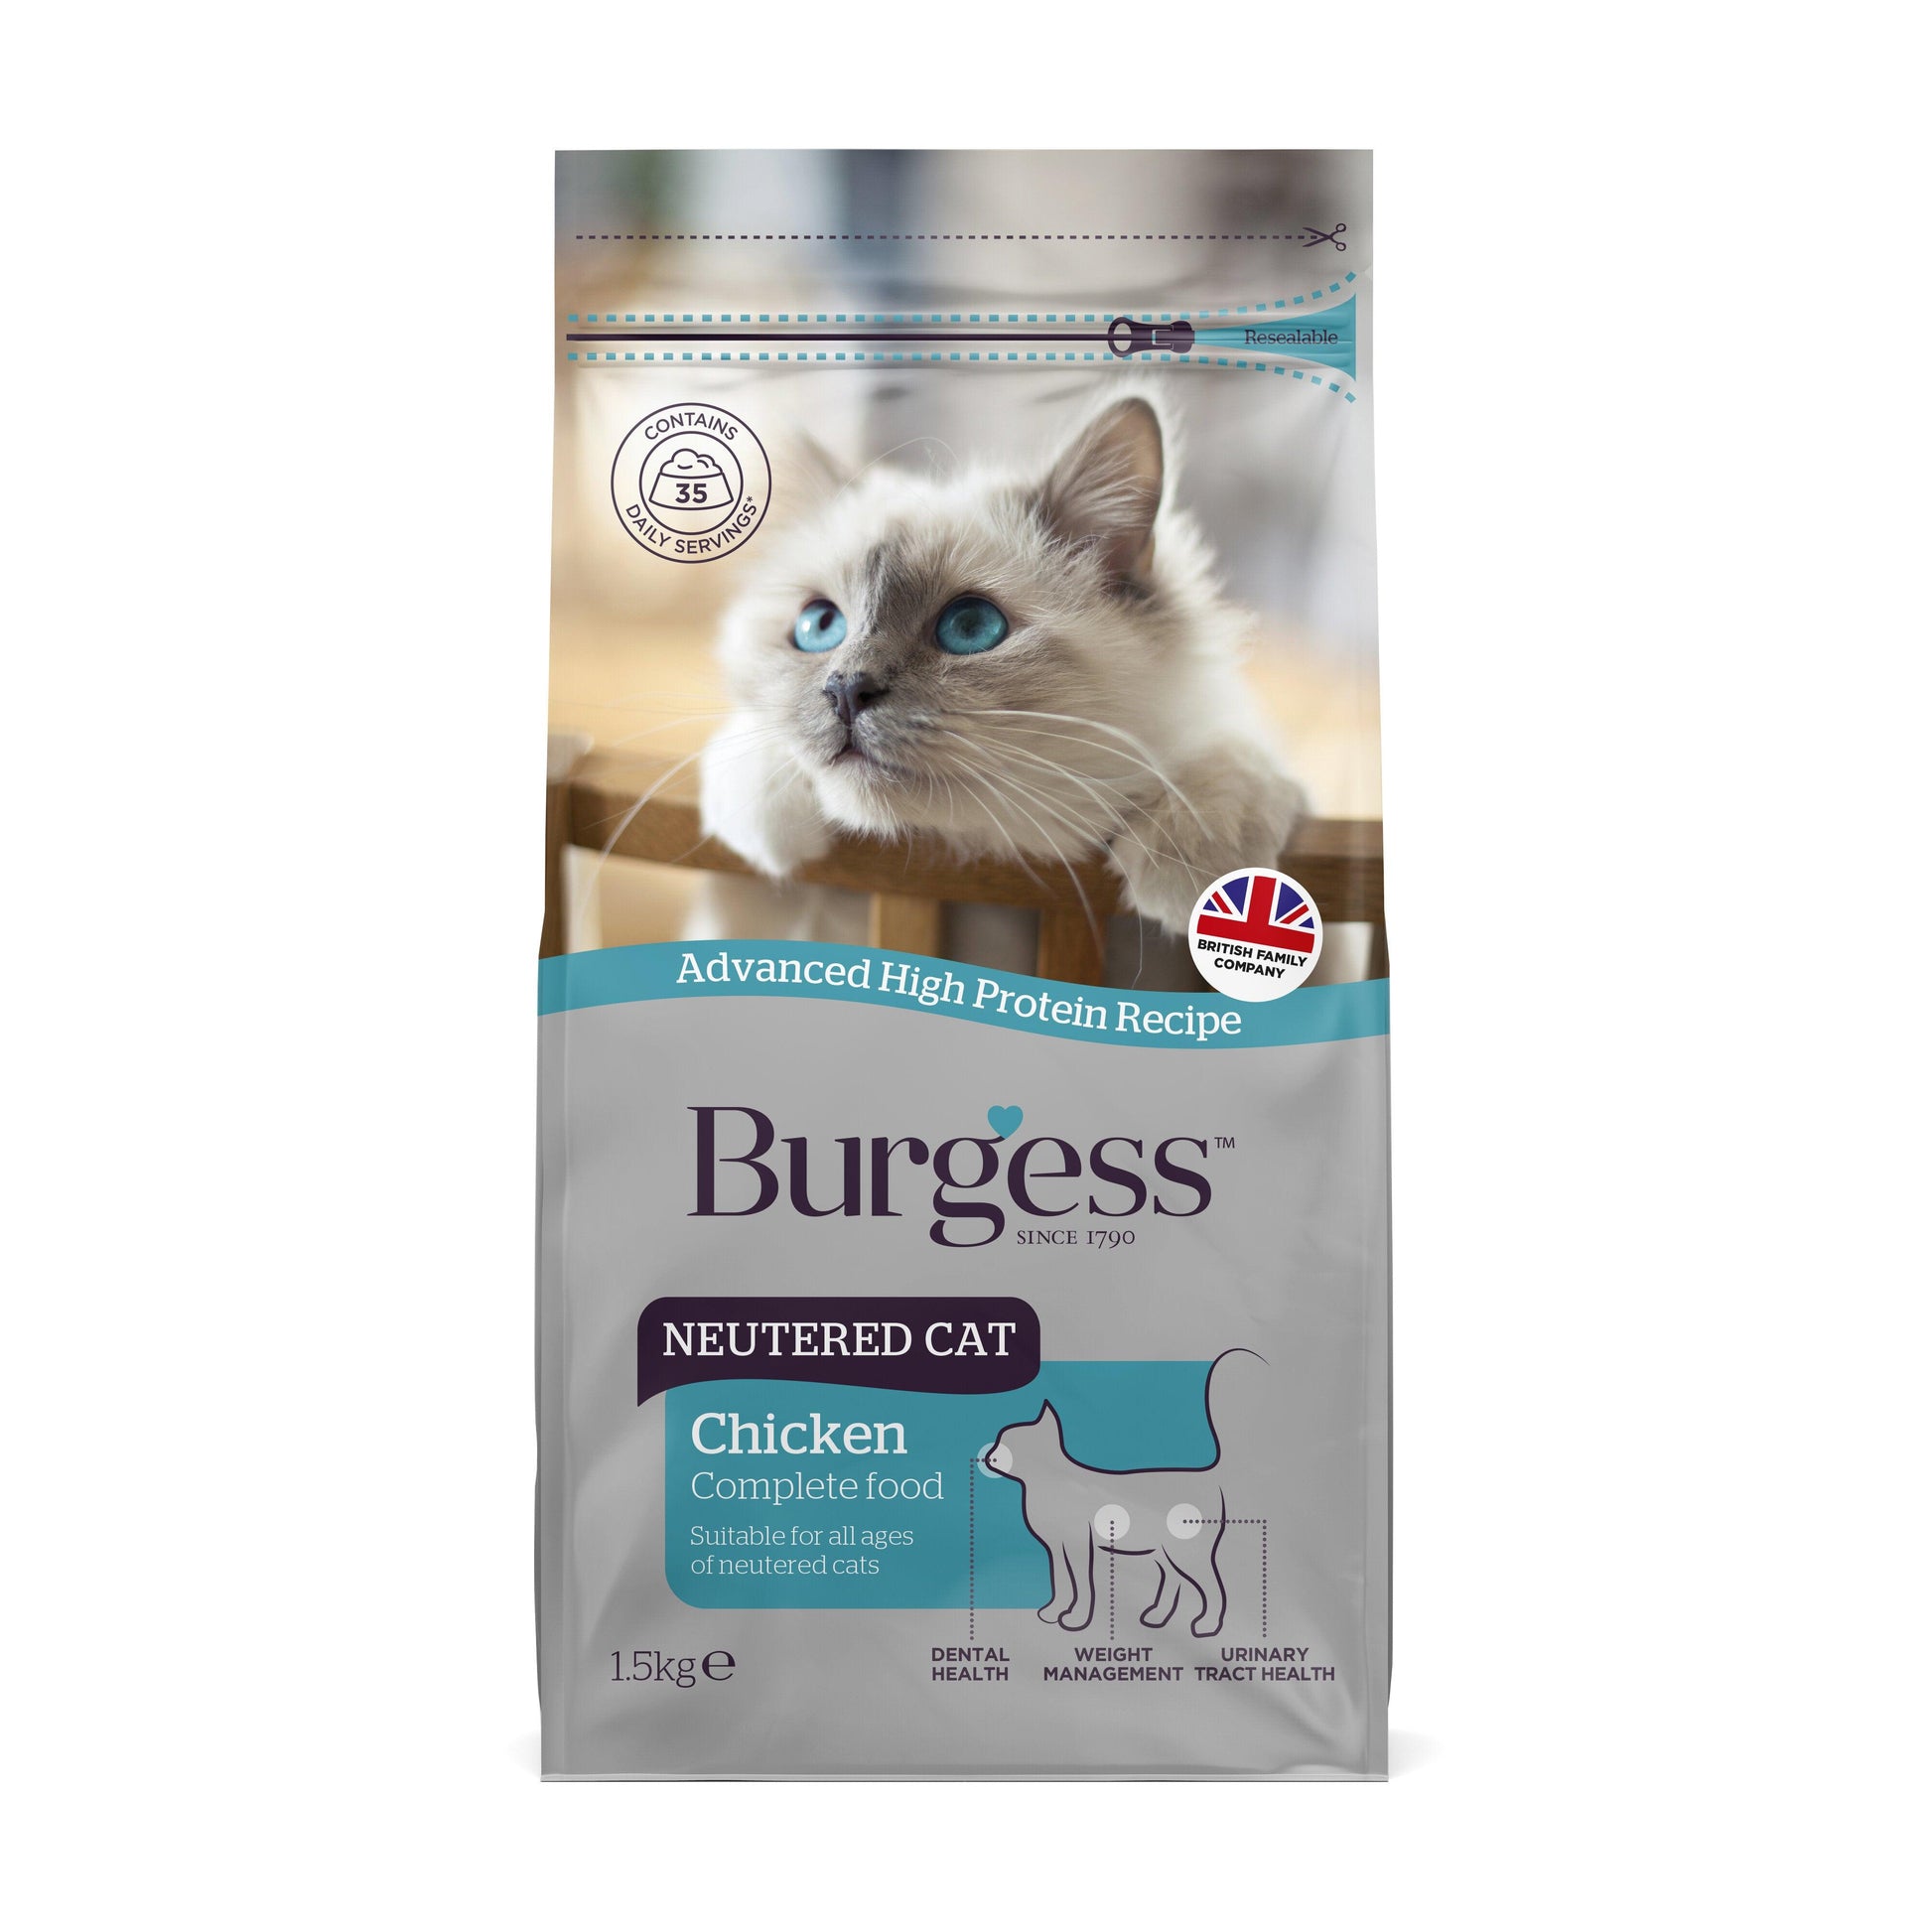 Burgess Neutered Cat Chicken - North East Pet Shop Burgees Excel